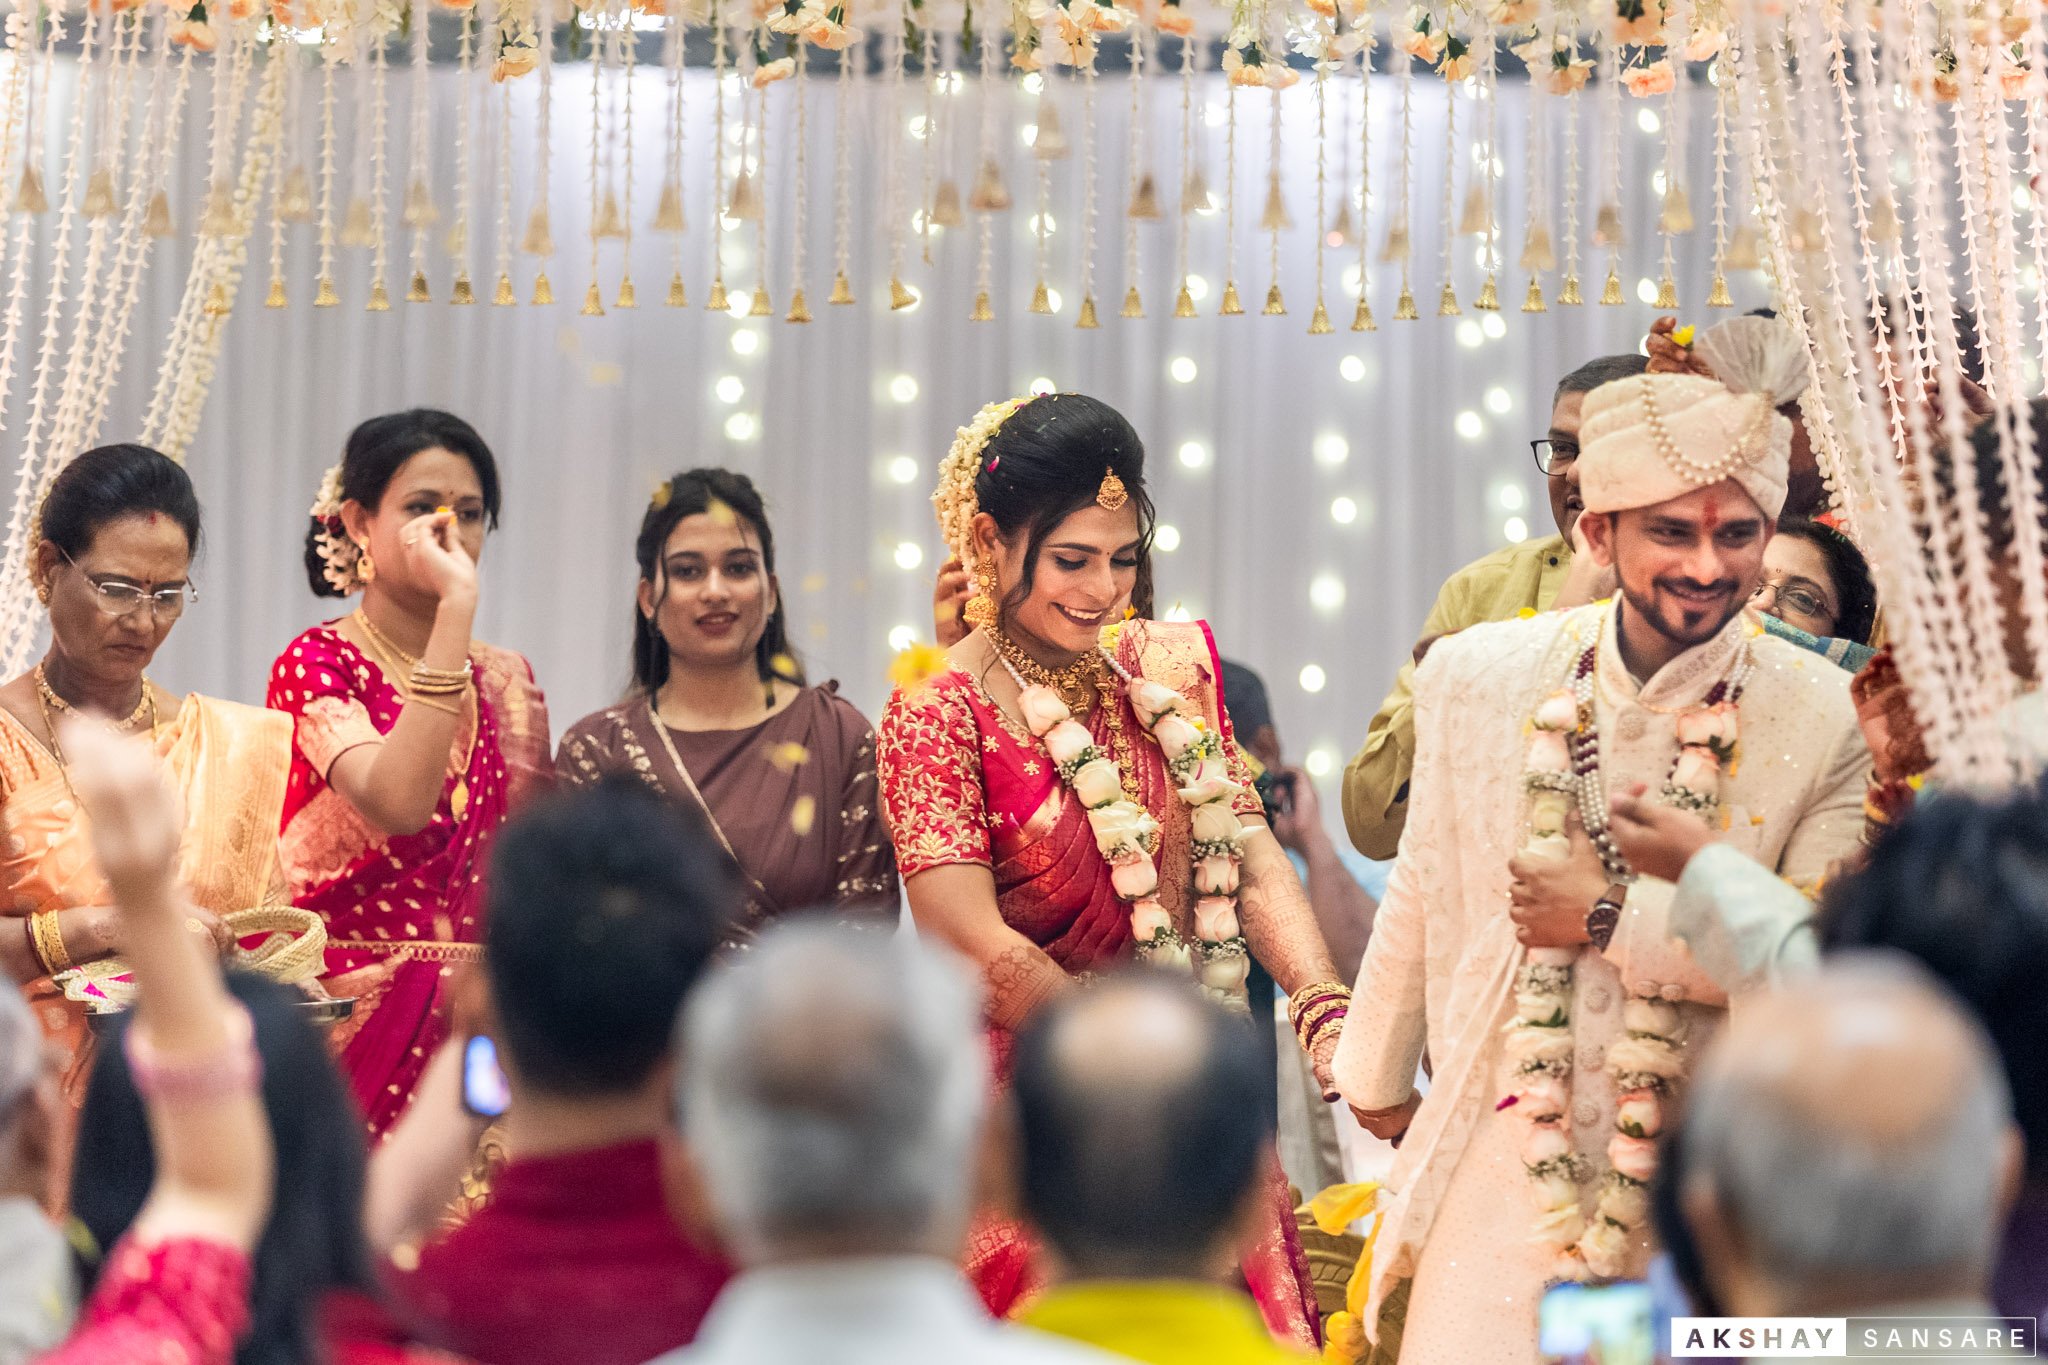 Lipika x Bhavya Compress Akshay Sansare Photography & Films Best wedding photographers in mumbai india-56.jpg